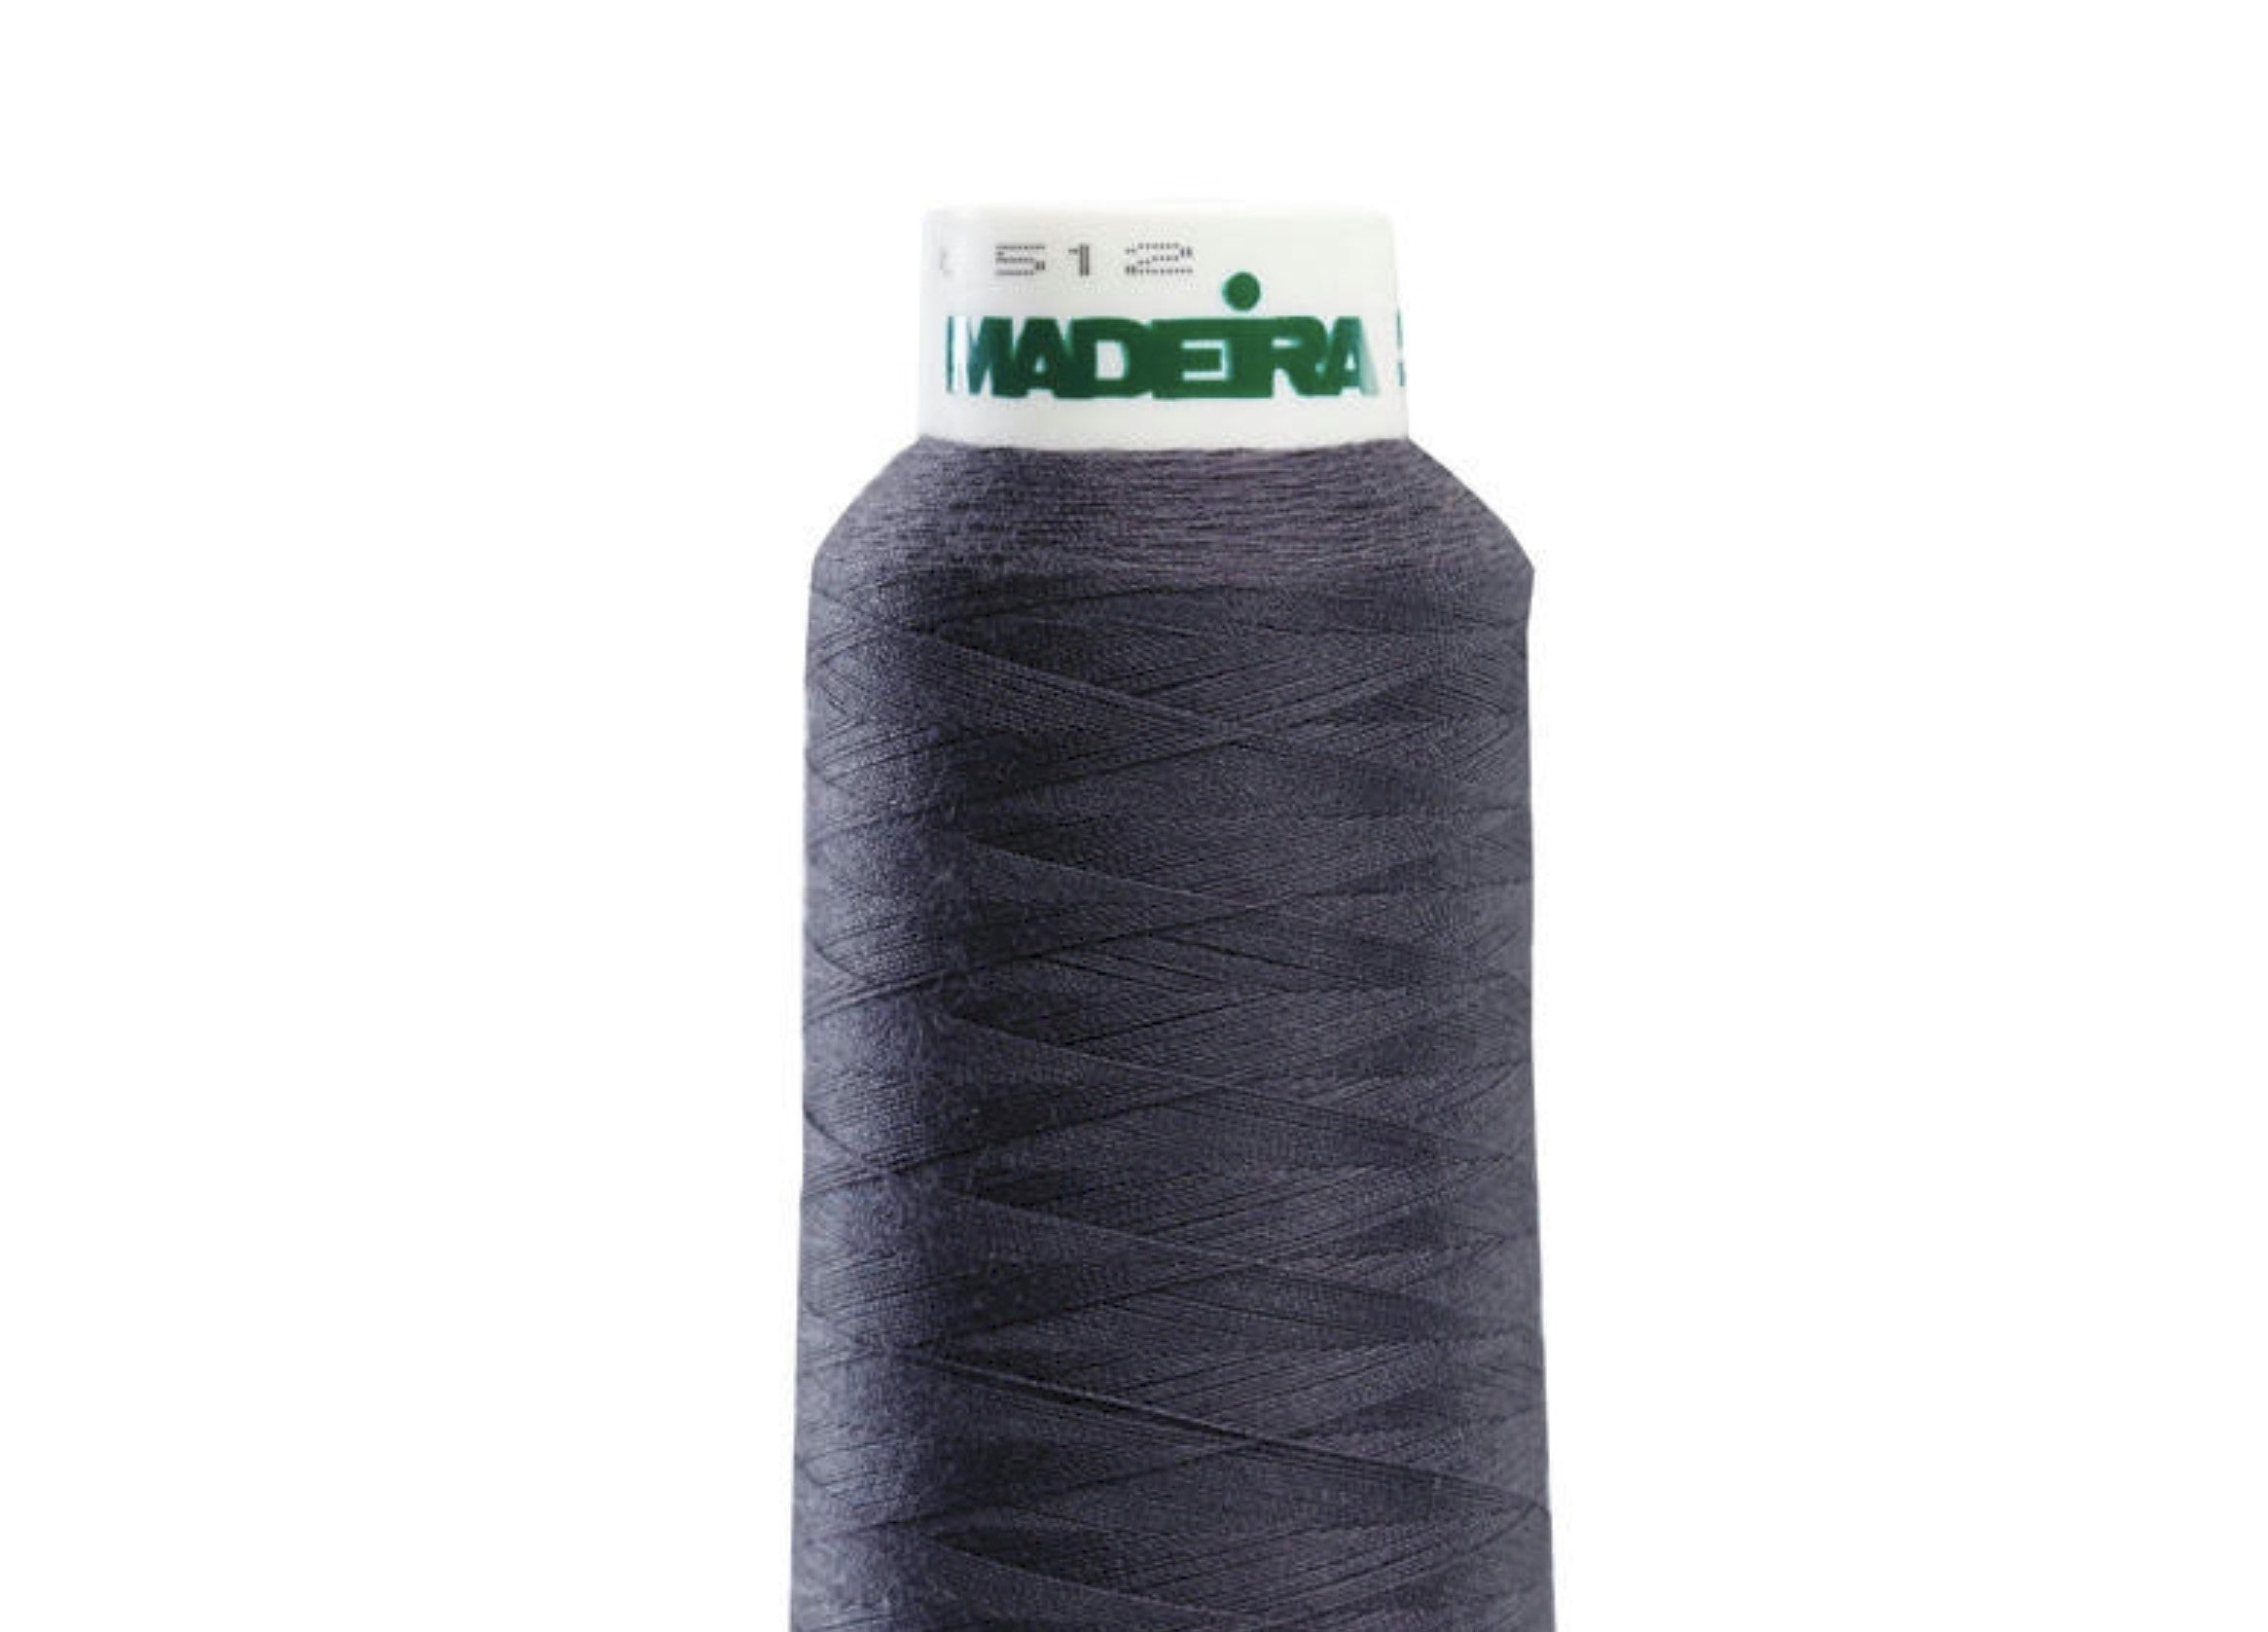 Graphite Color, Aerolock Premium Serger Thread, Ref. 8110 by Madeira®